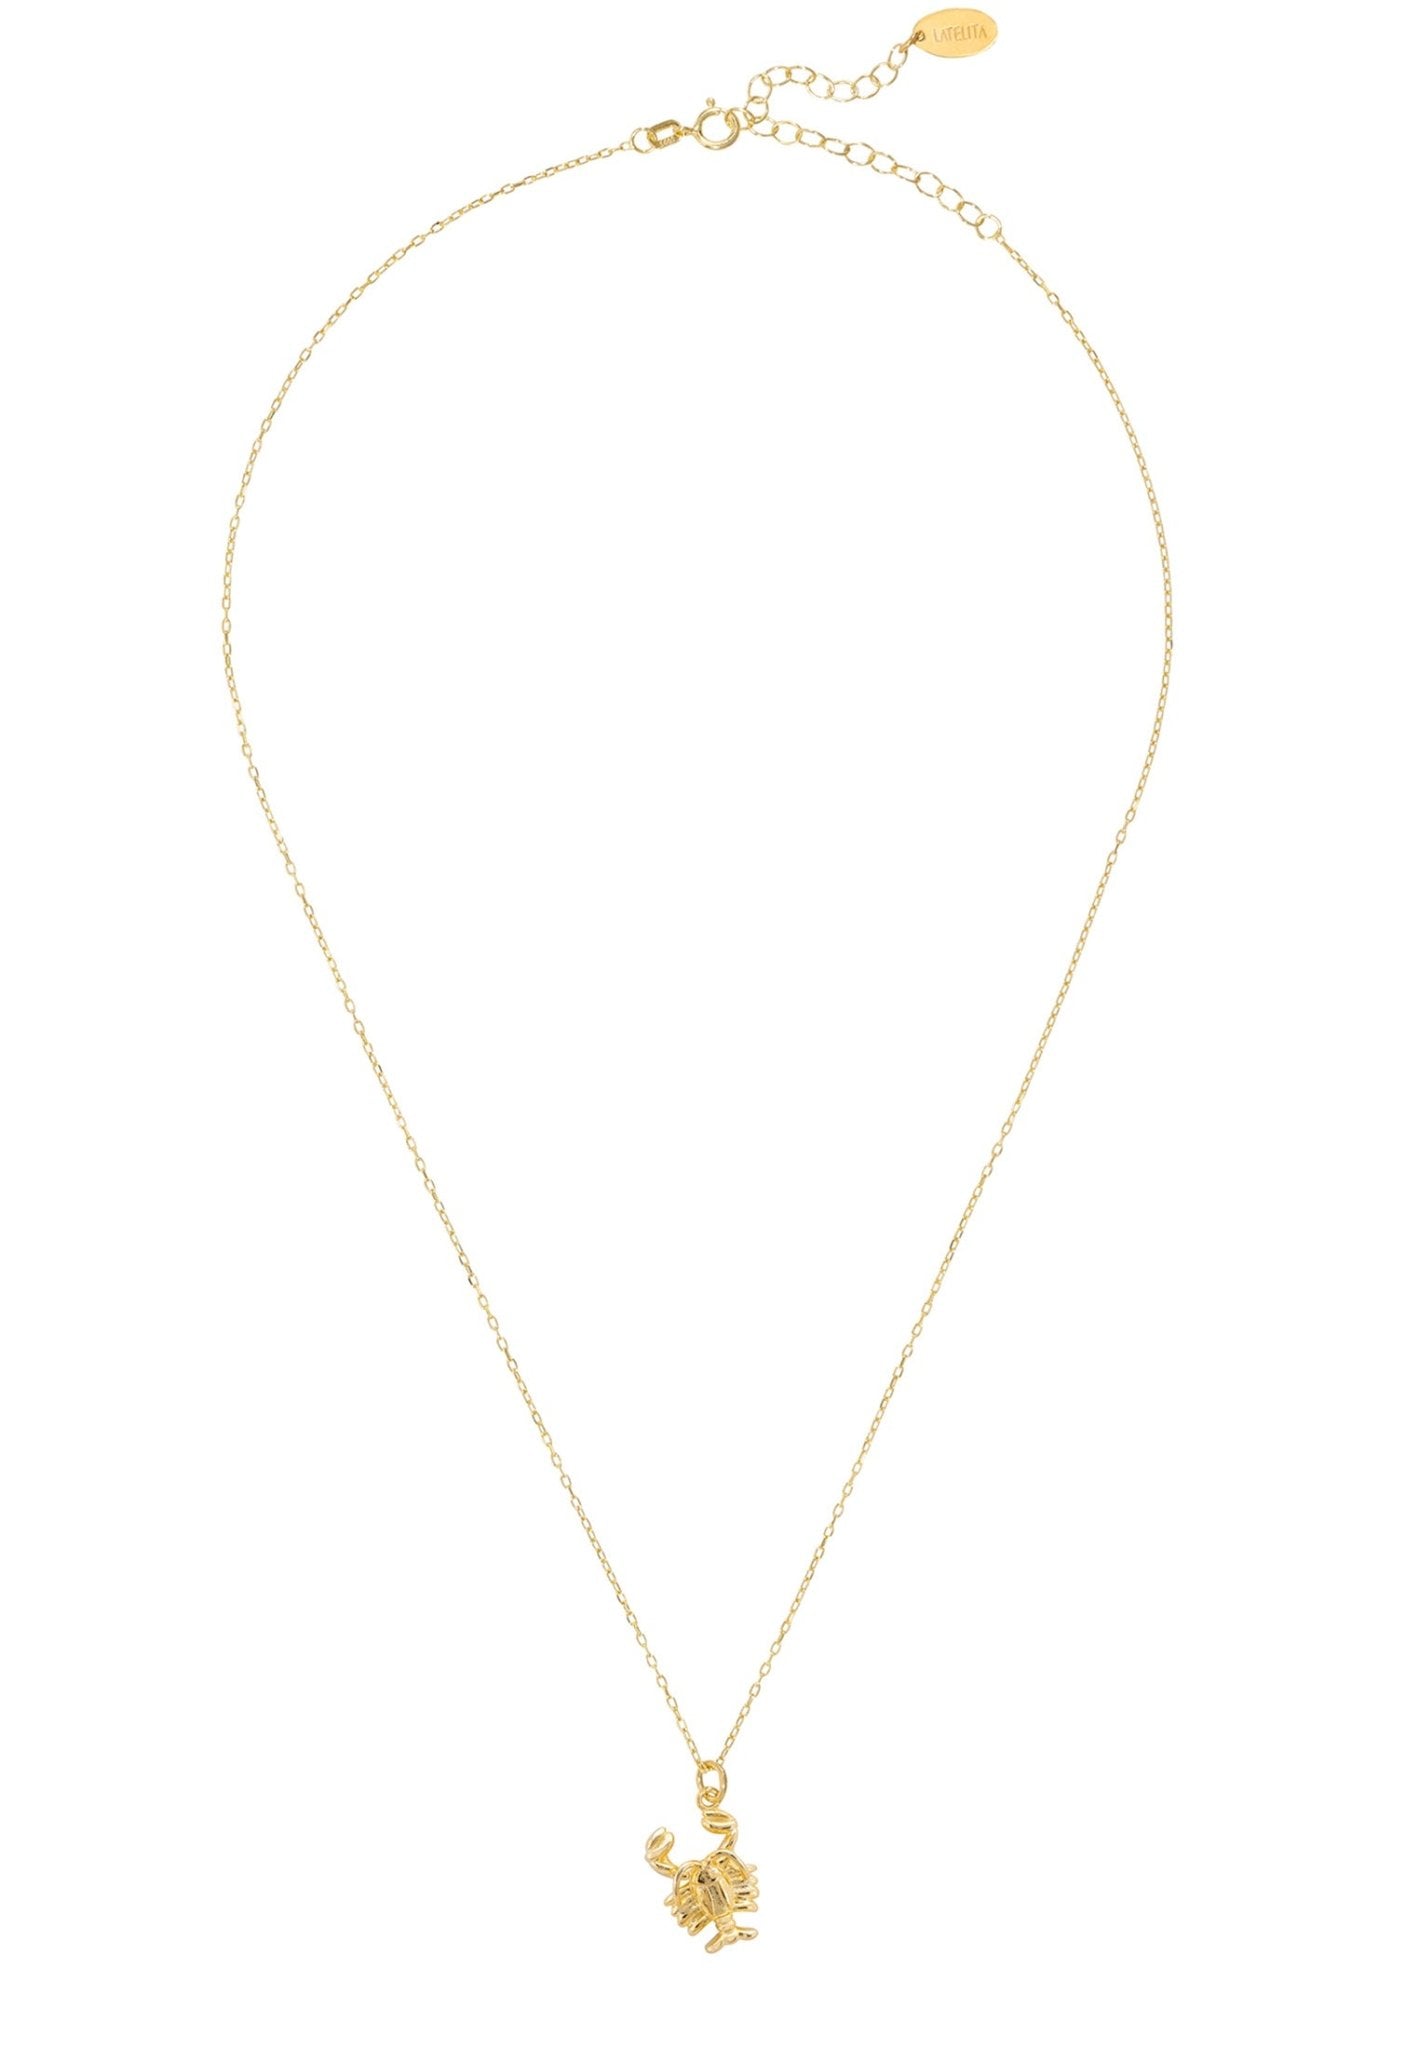 Personalized Necklaces - Zodiac Star Sign Necklace Gold Scorpio 